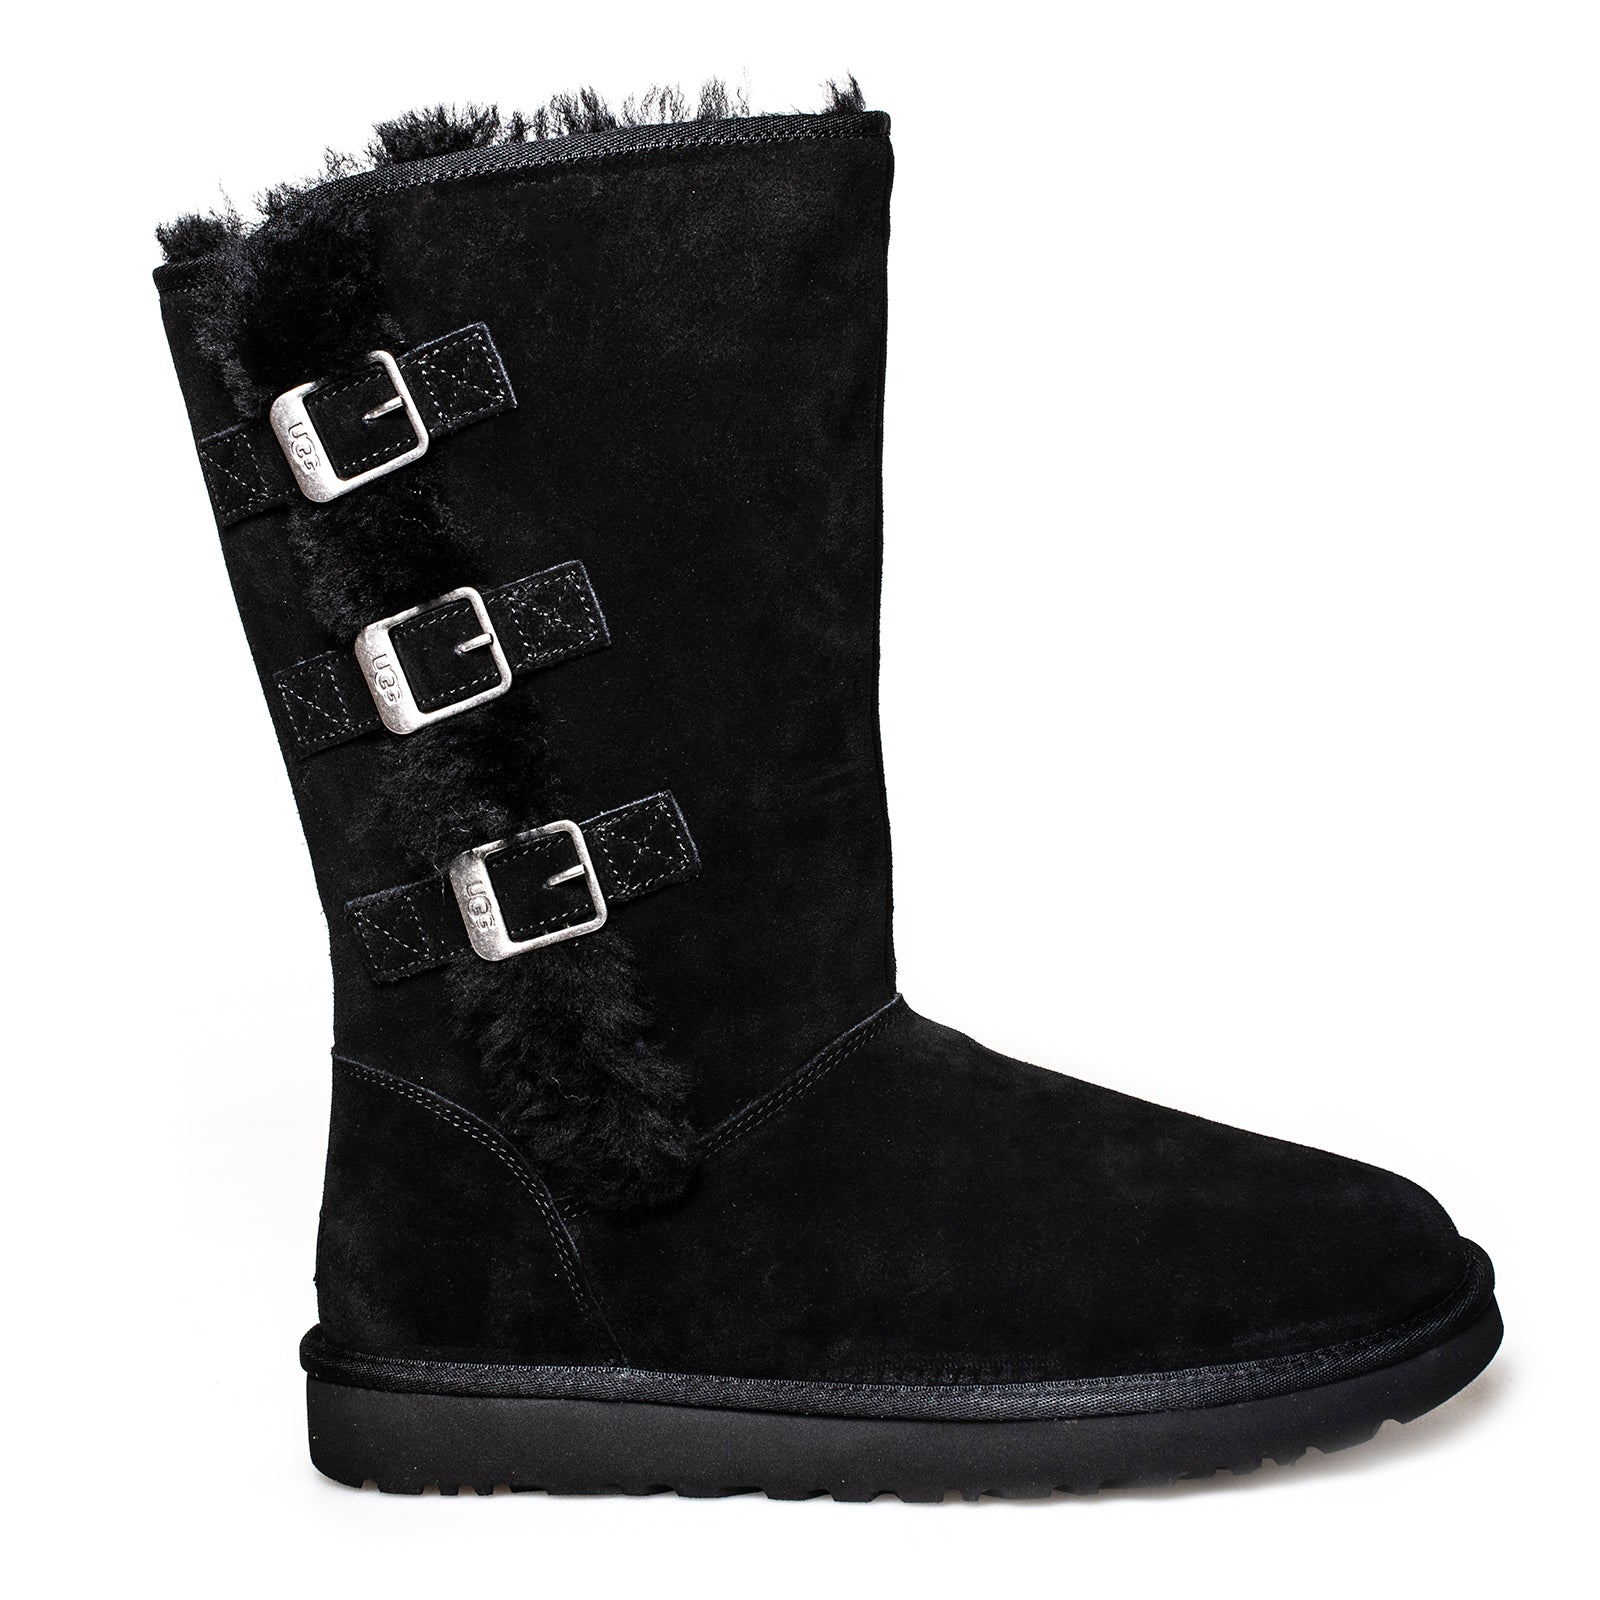 UGG Klea Black Boots - Women's - MyCozyBoots